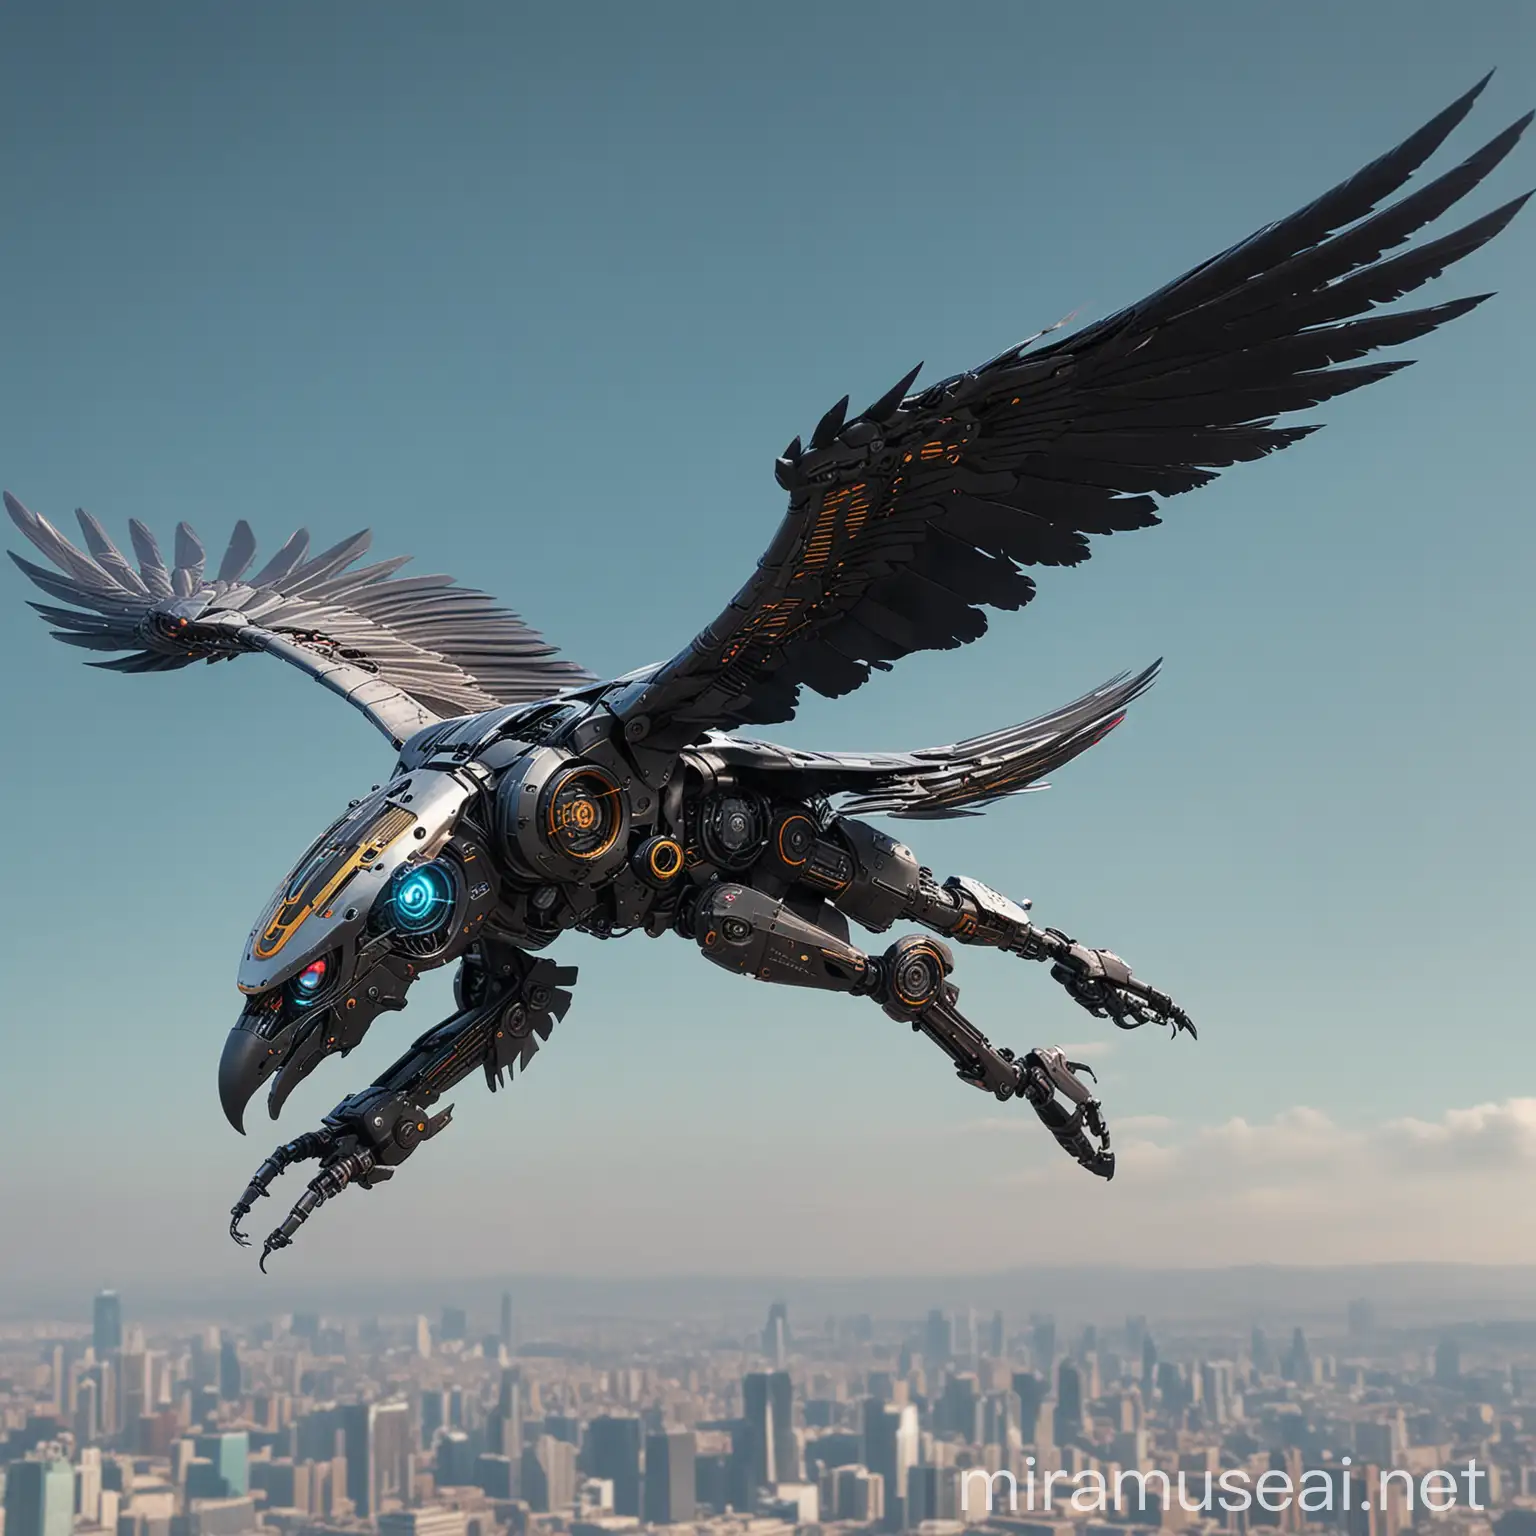 robo black eagle flying cyberpunk style full wing